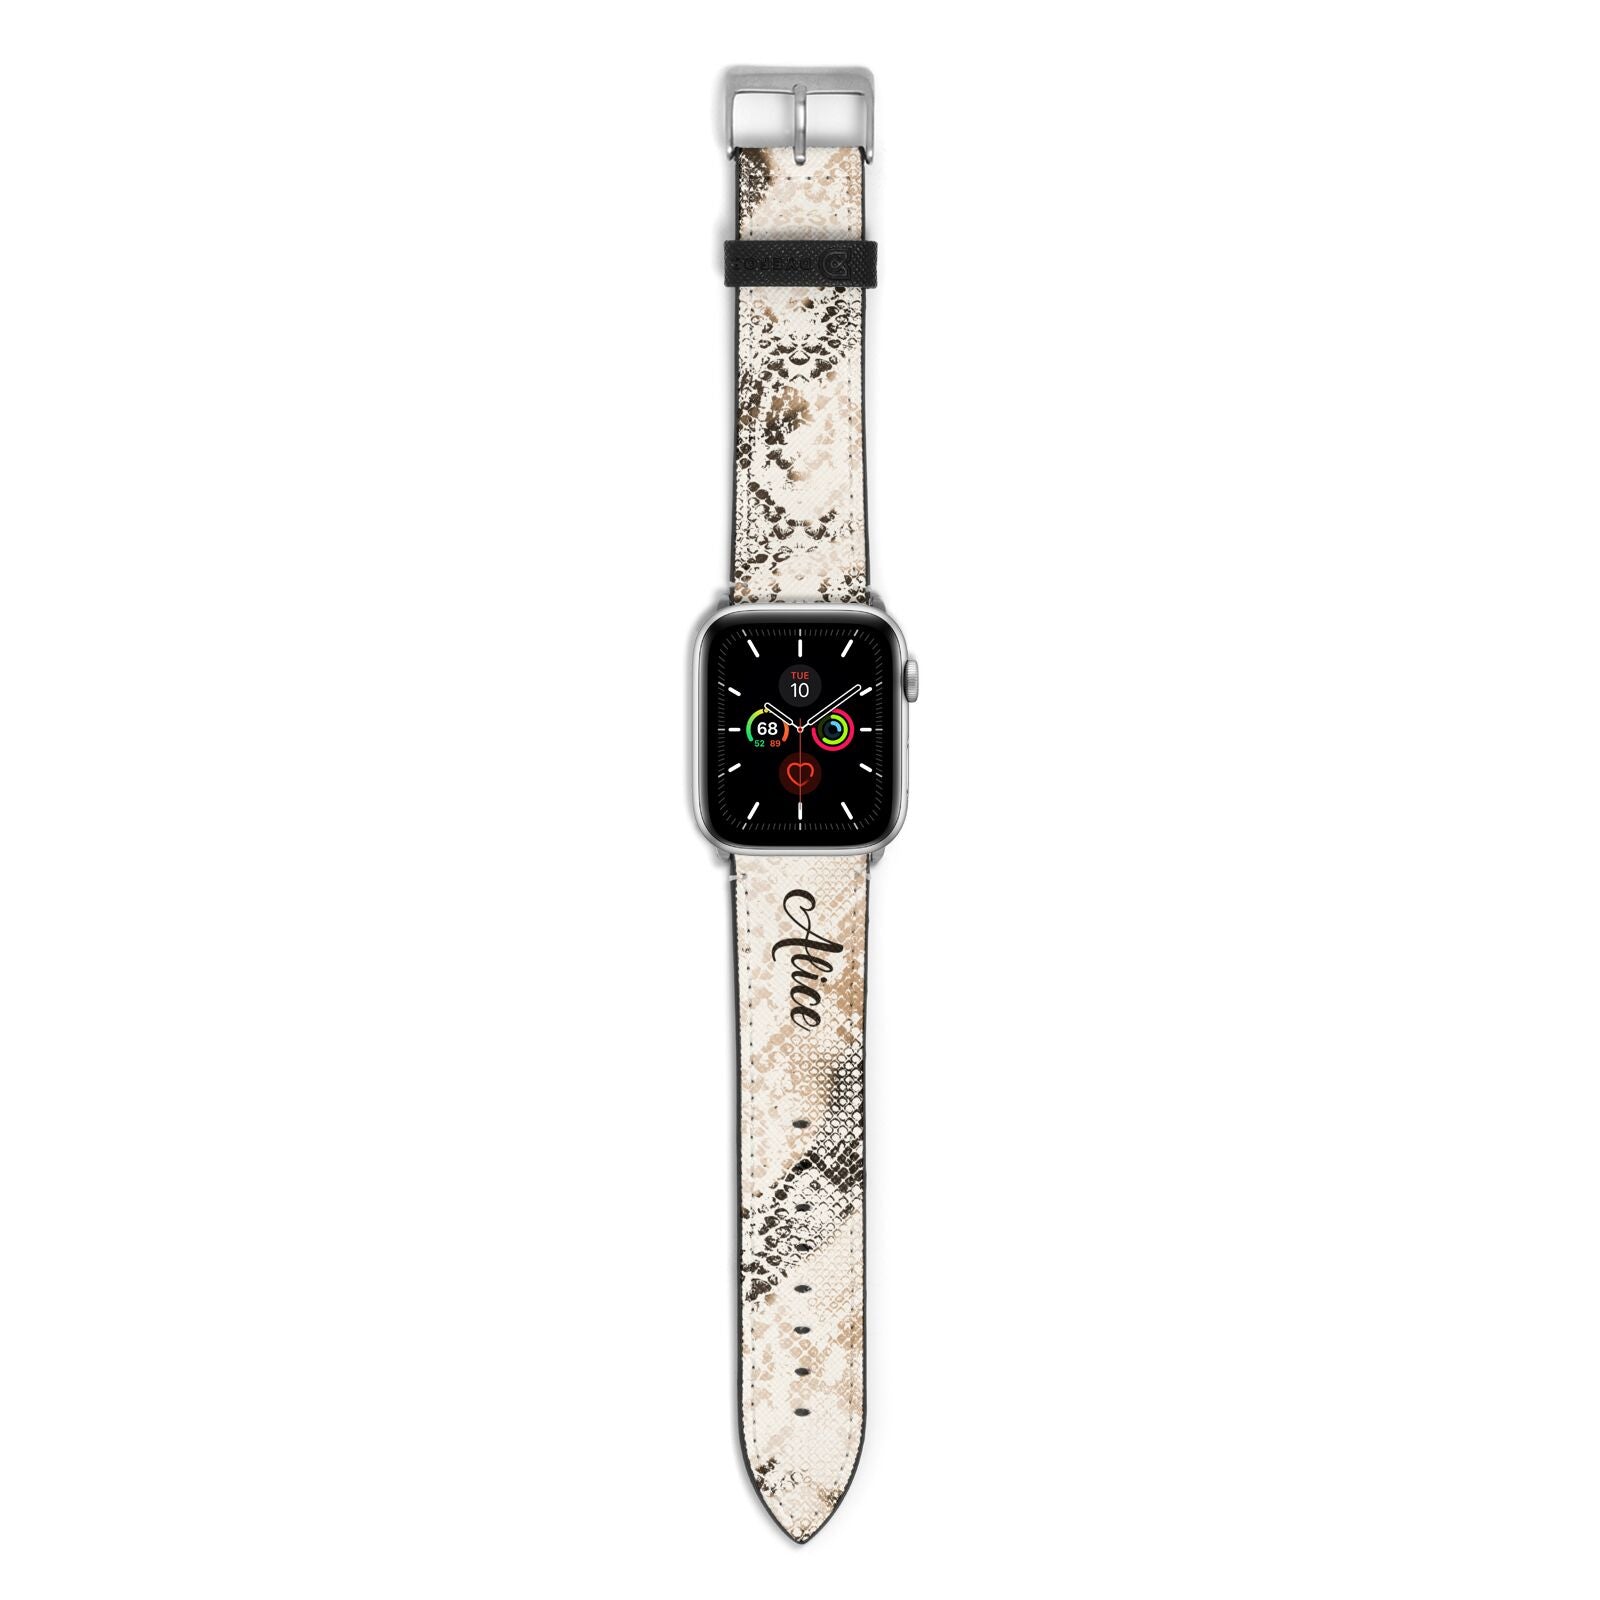 Custom Snakeskin Apple Watch Strap with Silver Hardware